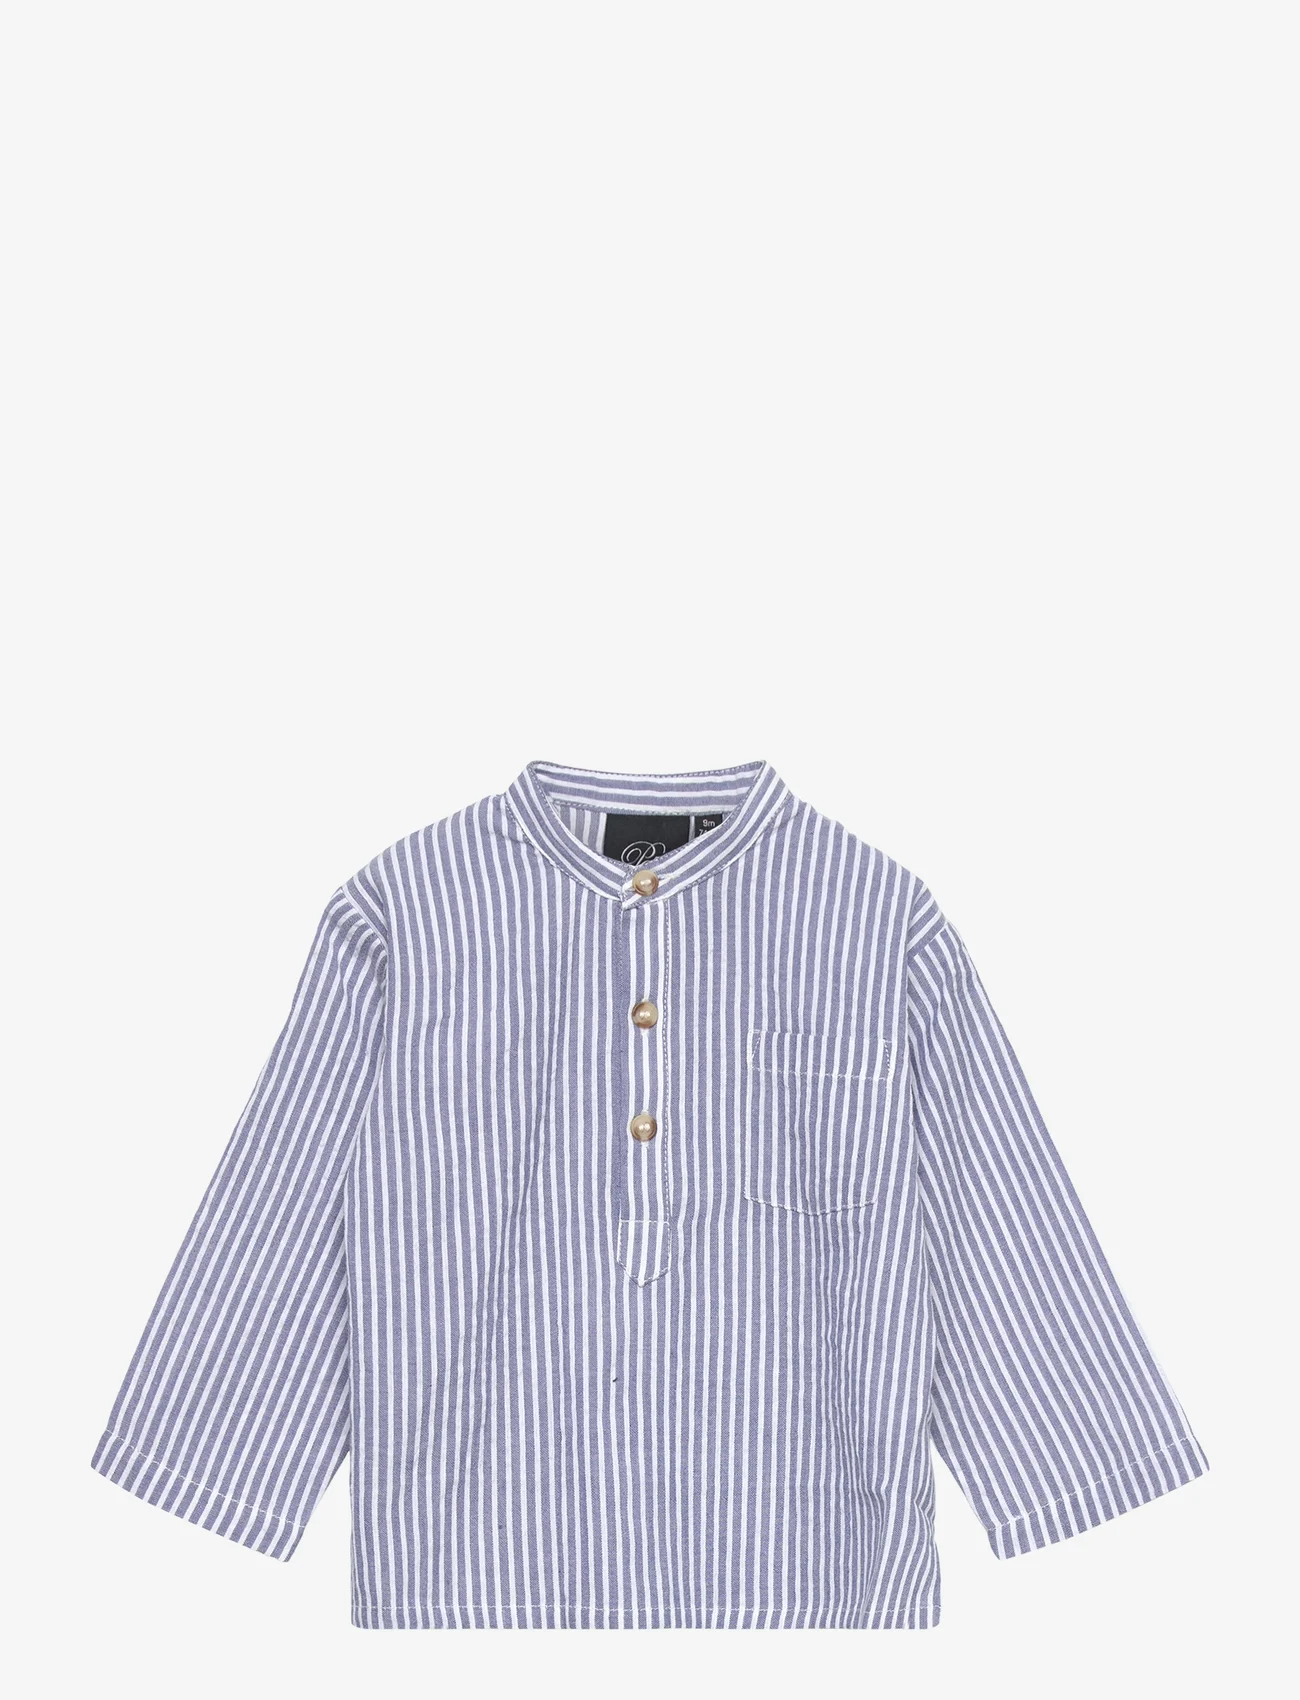 Sofie Schnoor Baby and Kids - Shirt - langærmede skjorter - stripe cotton - 0